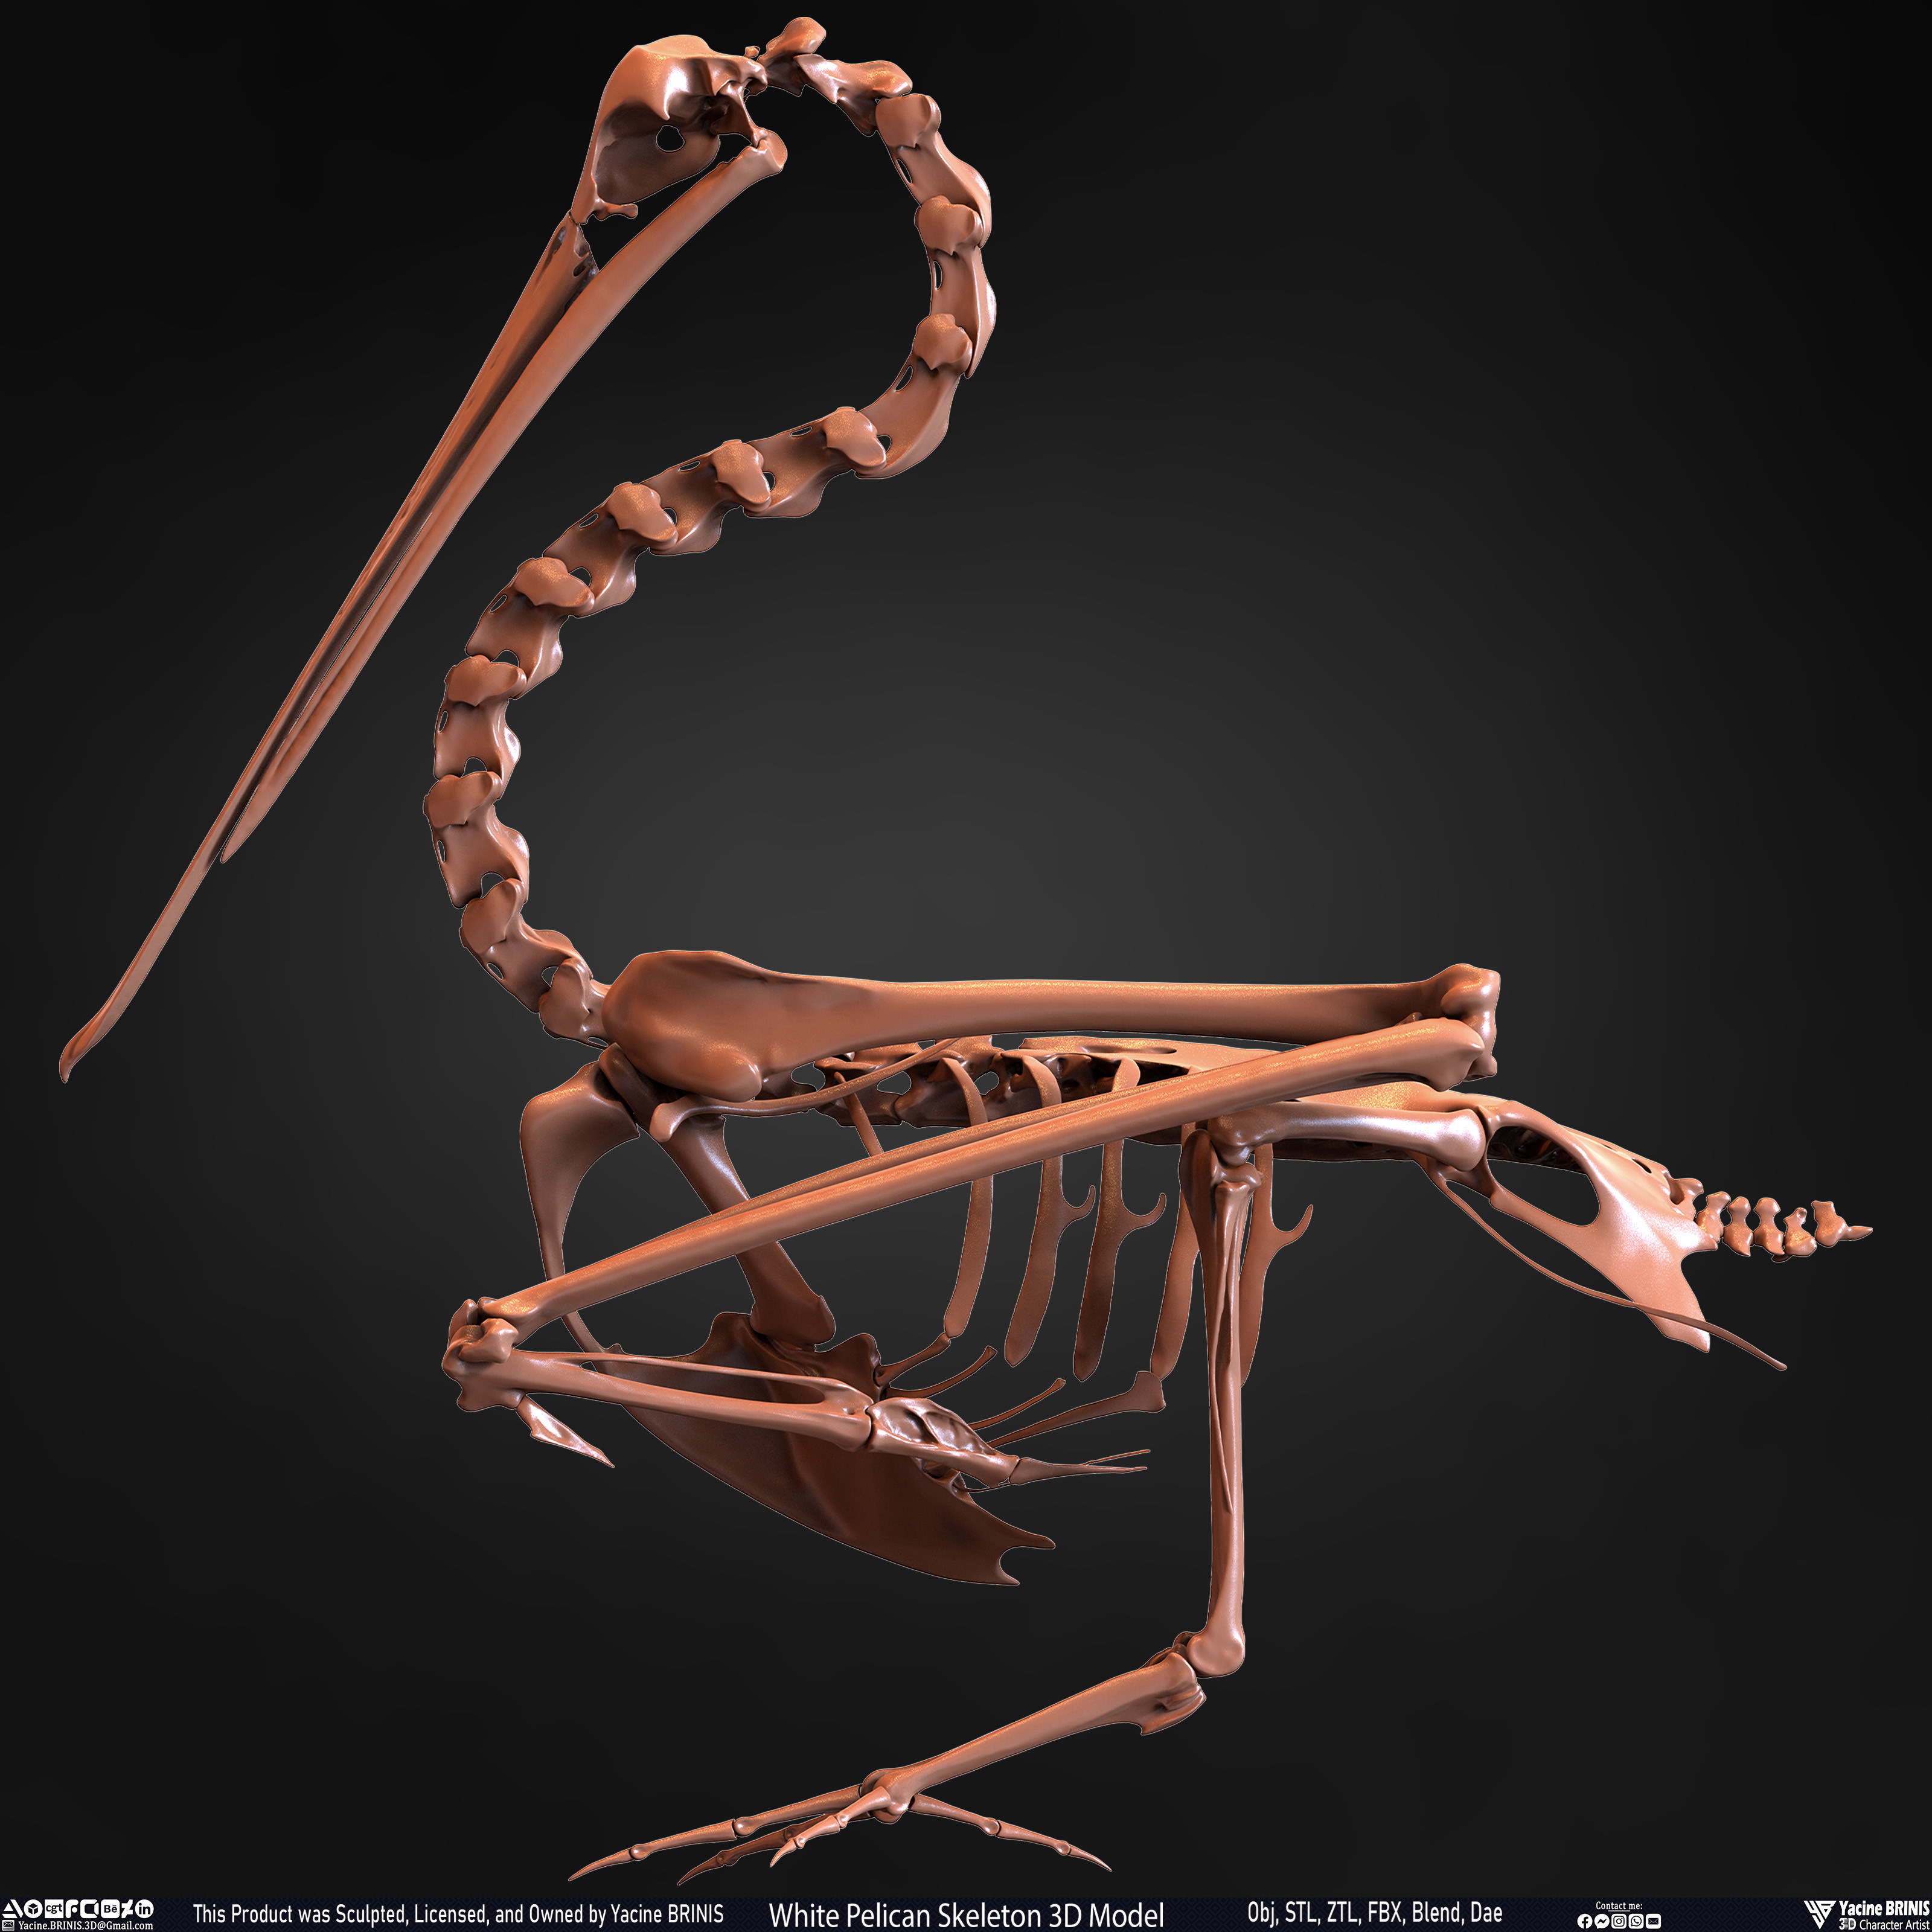 White Pelican Skeleton 3D Model Sculpted by Yacine BRINIS Set 013